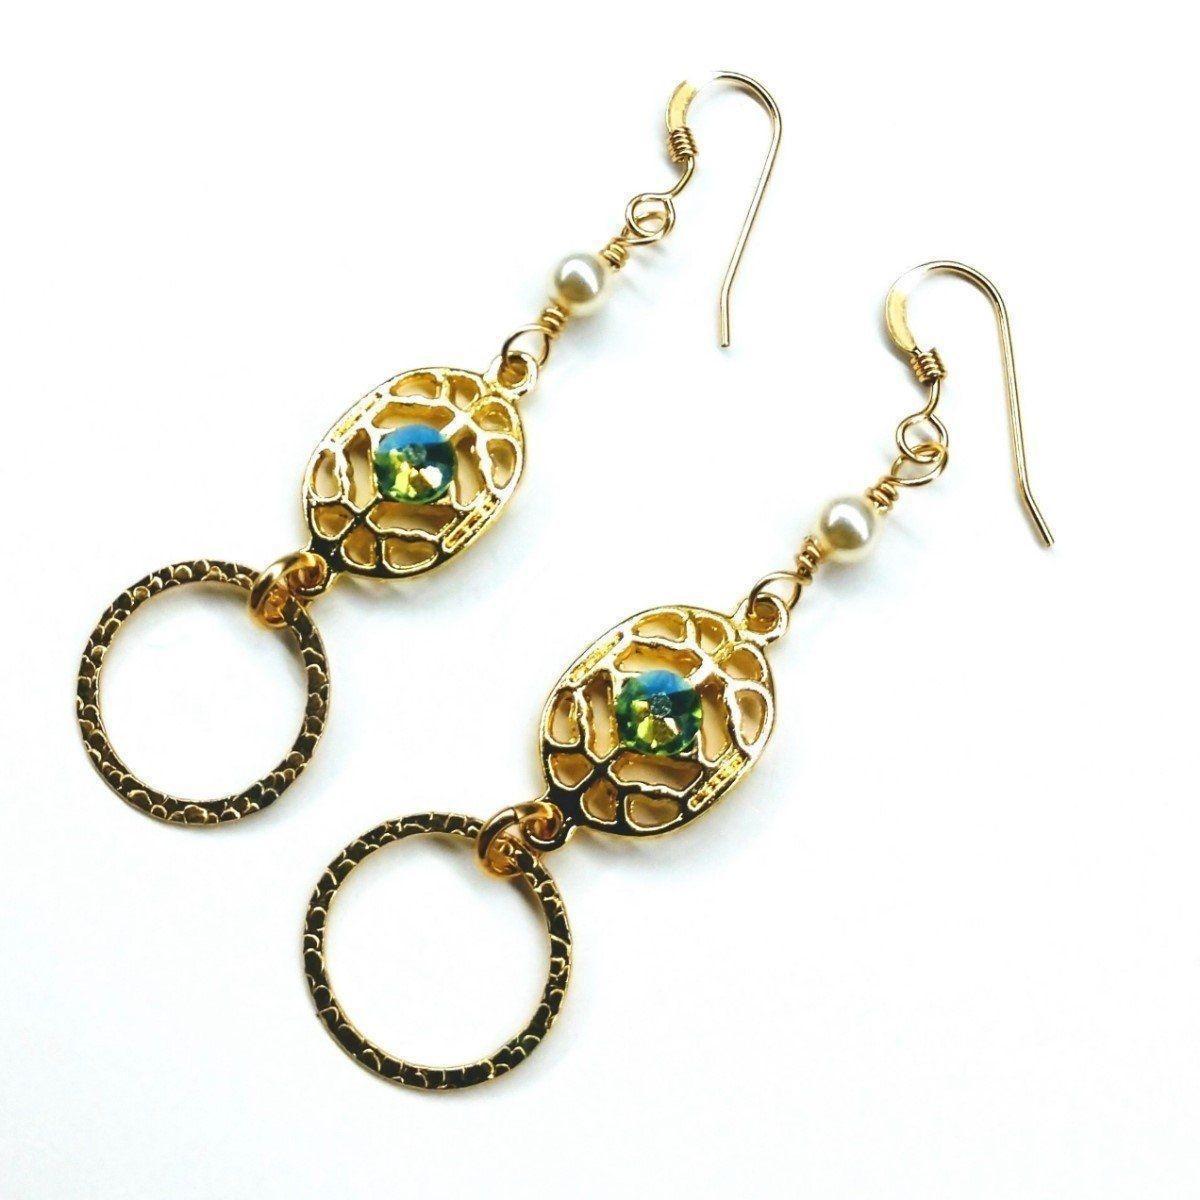 Handmade 14KT Gold-Filled Green Crystal Earrings with Swarovski Pearls & Filigree Component - Earrings - Bijou Her -  -  - 